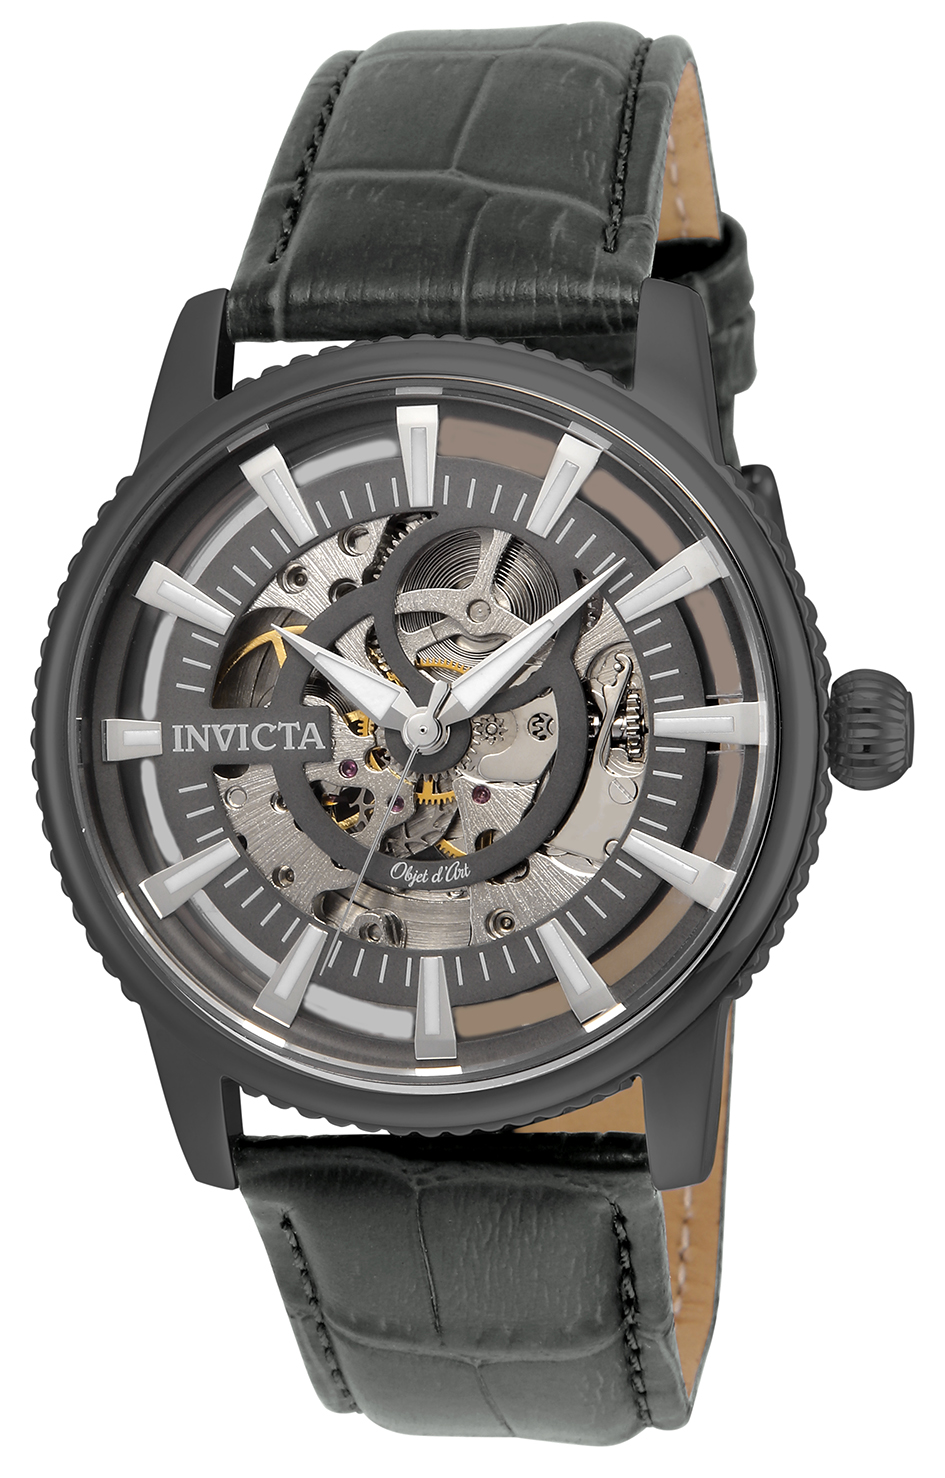 Invicta Objet D Art Automatic Men's Watch - 42mm, Grey (22644)